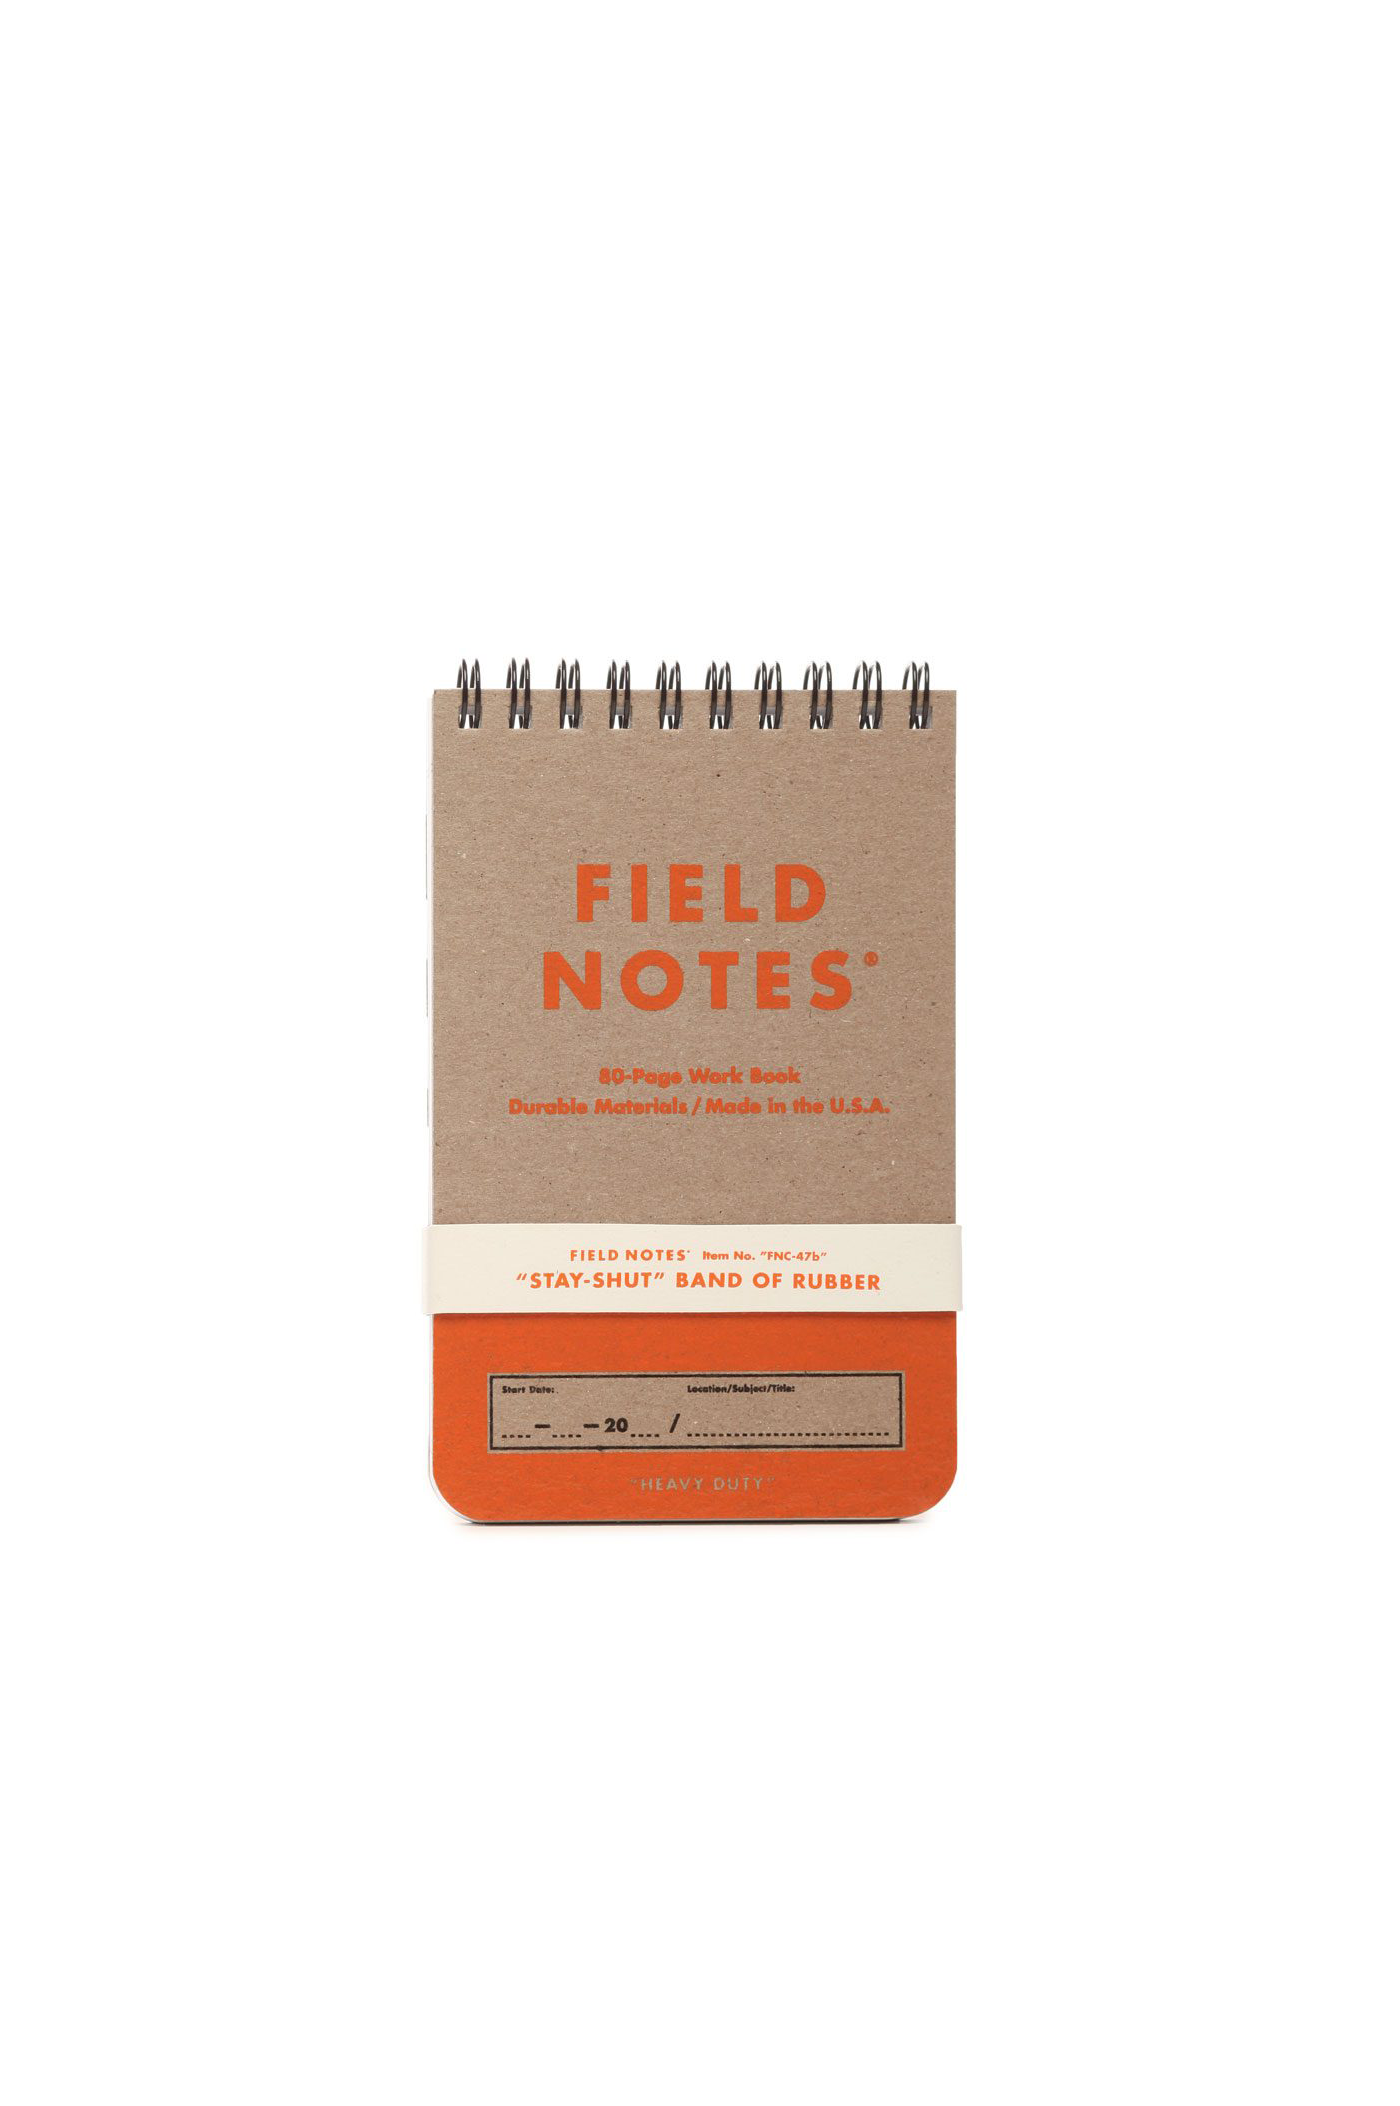 Field Notes Heavy Duty Notebook 2 Pack